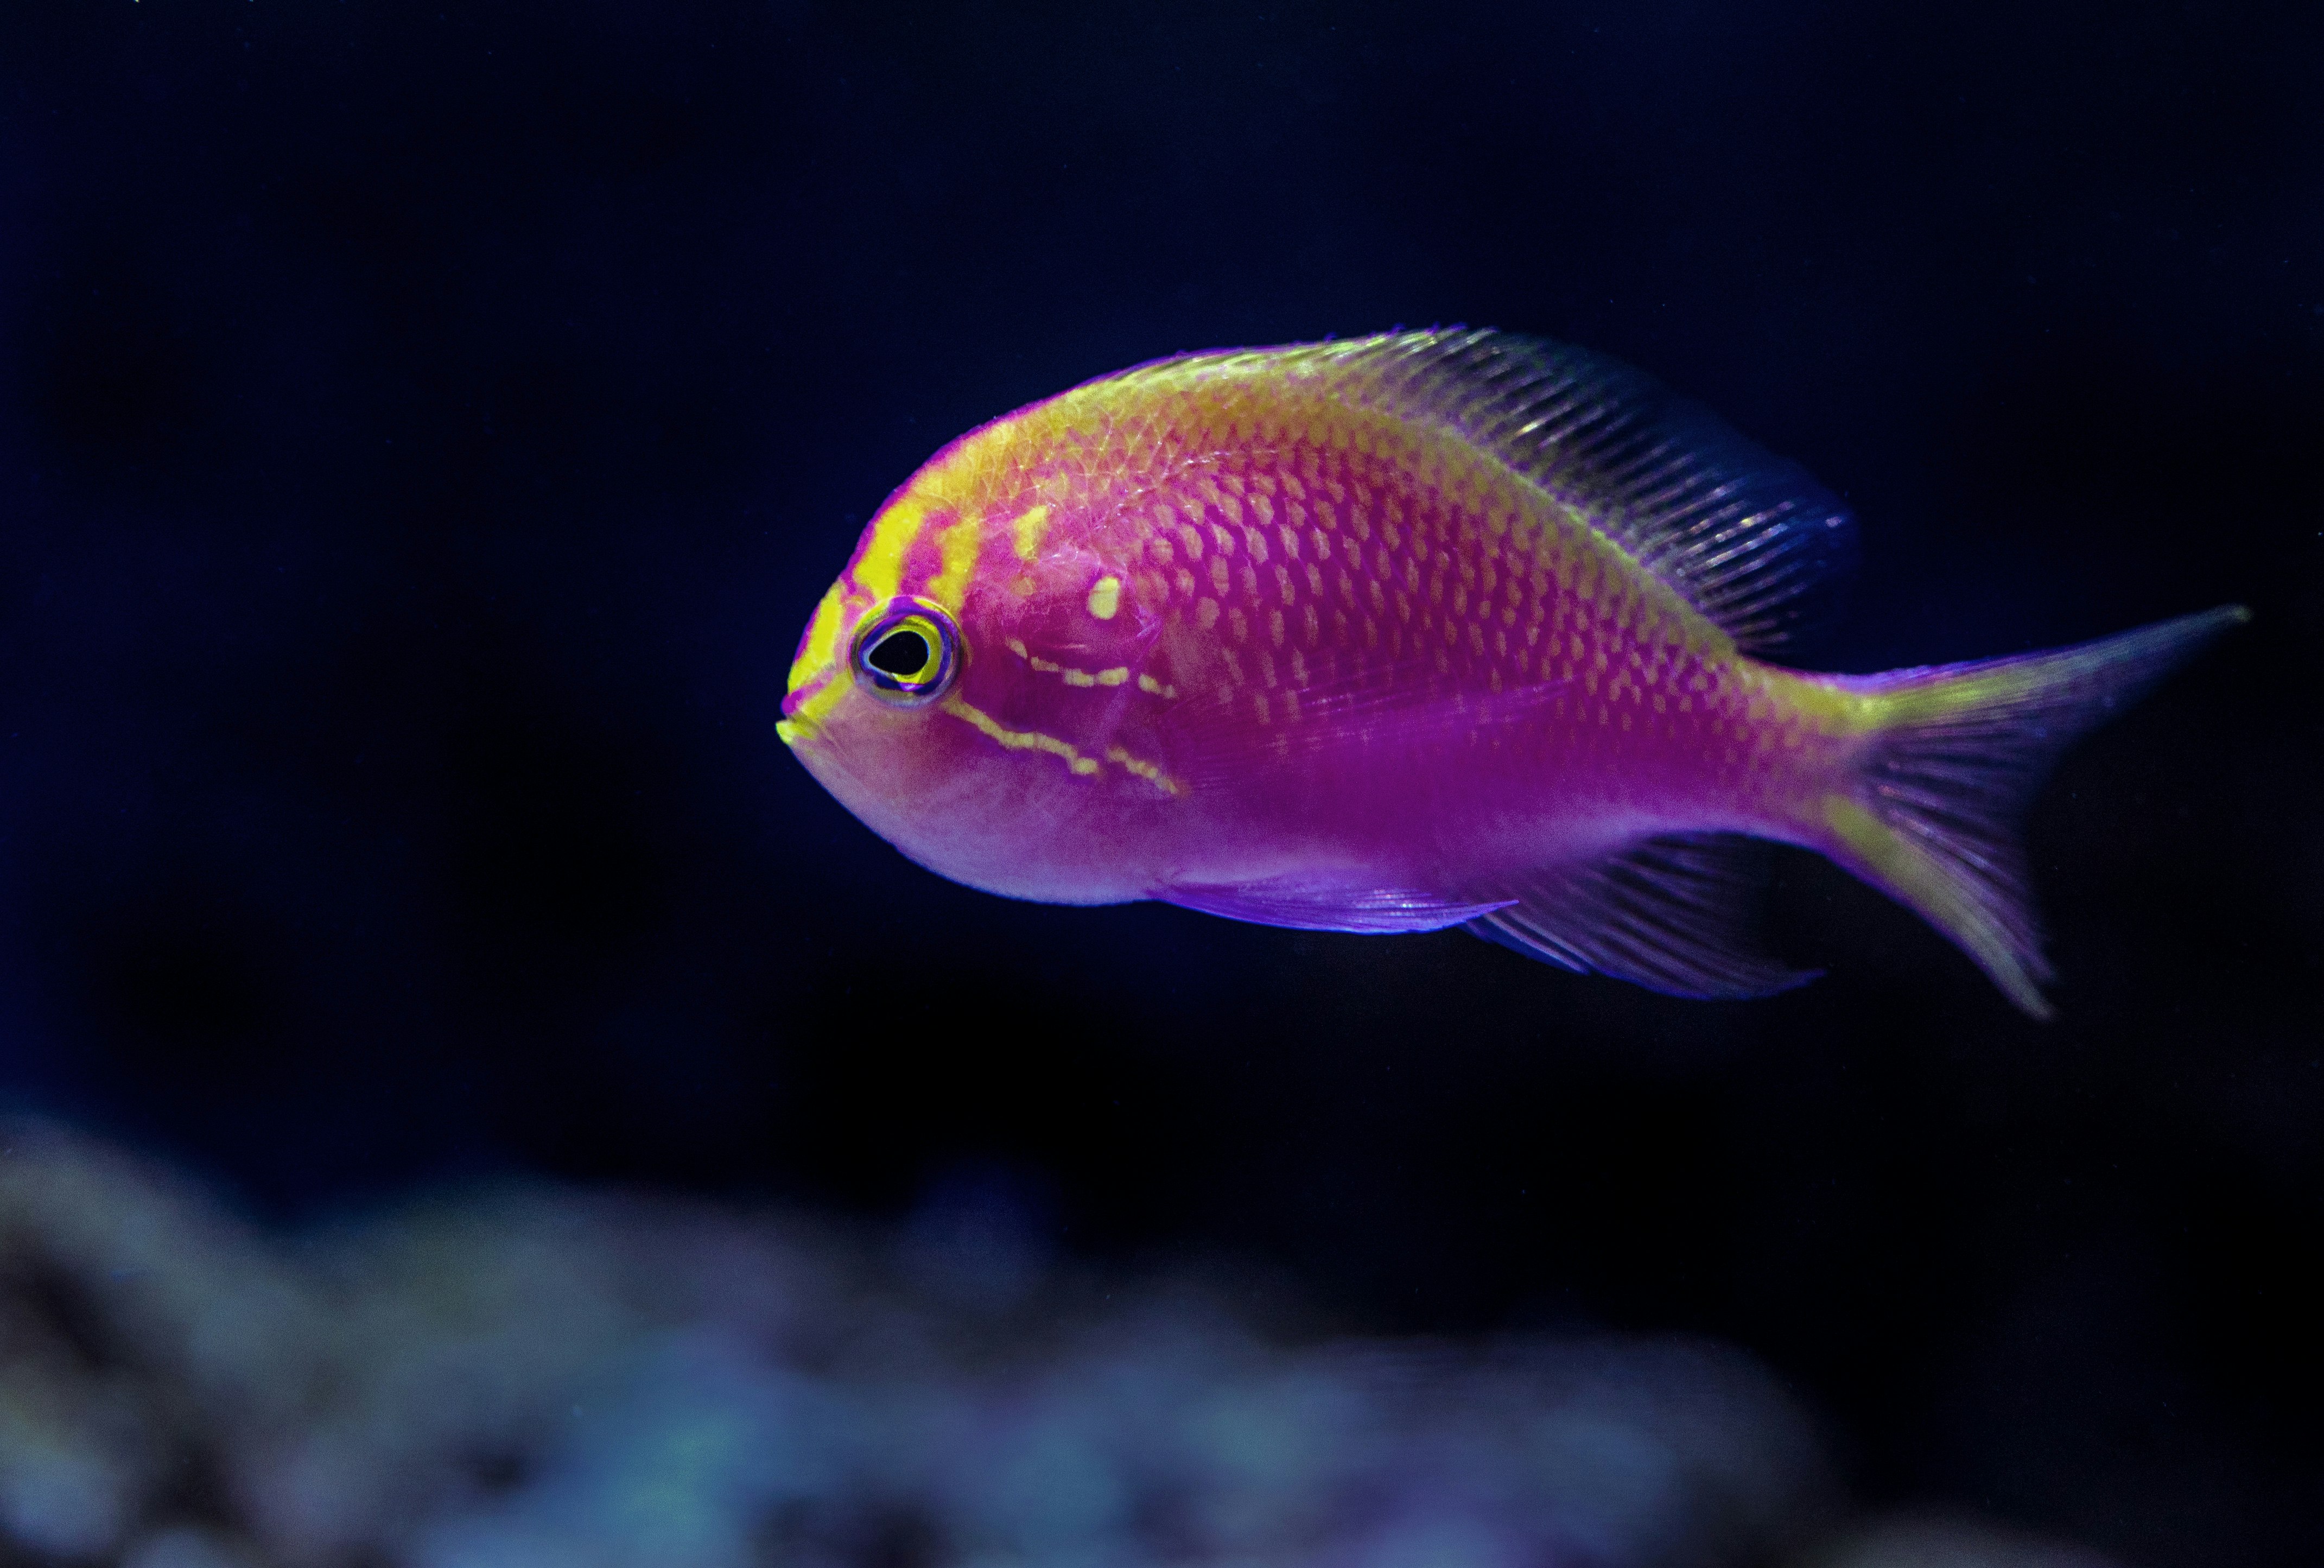 A beautiful little sunburst Anthias fish at the Cairns aquarium